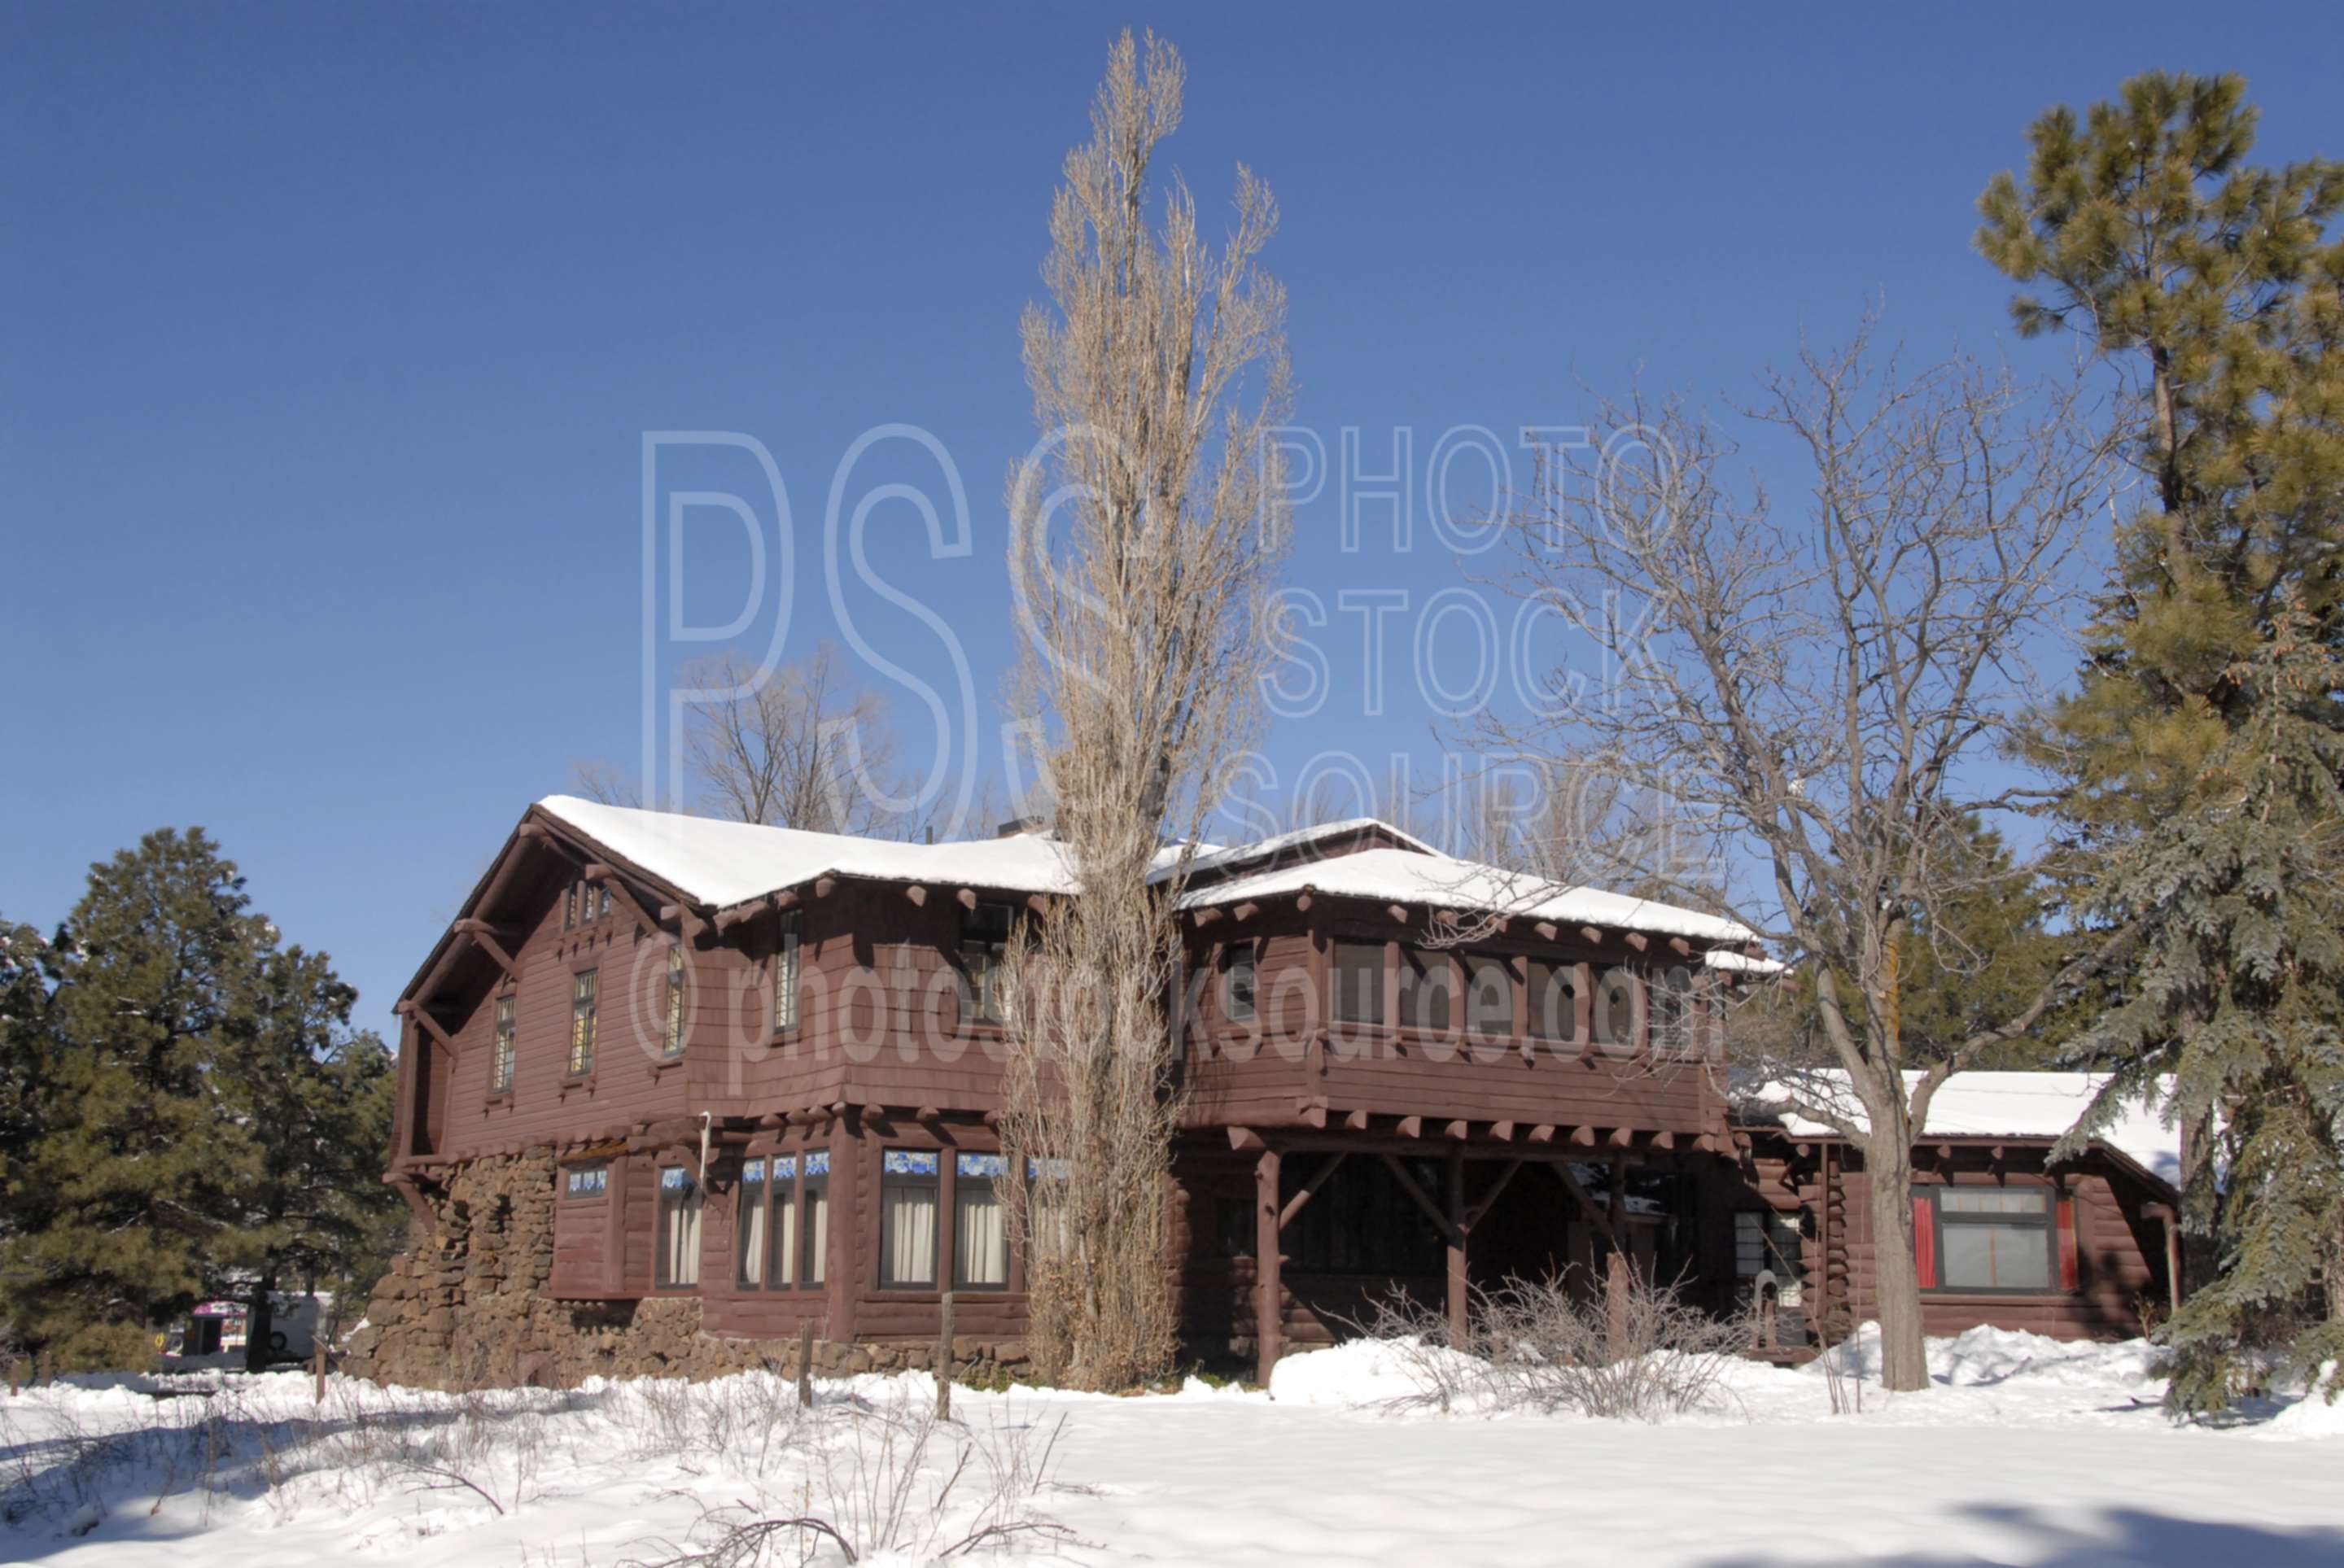 Riordan Mansion,log cabin,house,building,historical,history,snow,winter